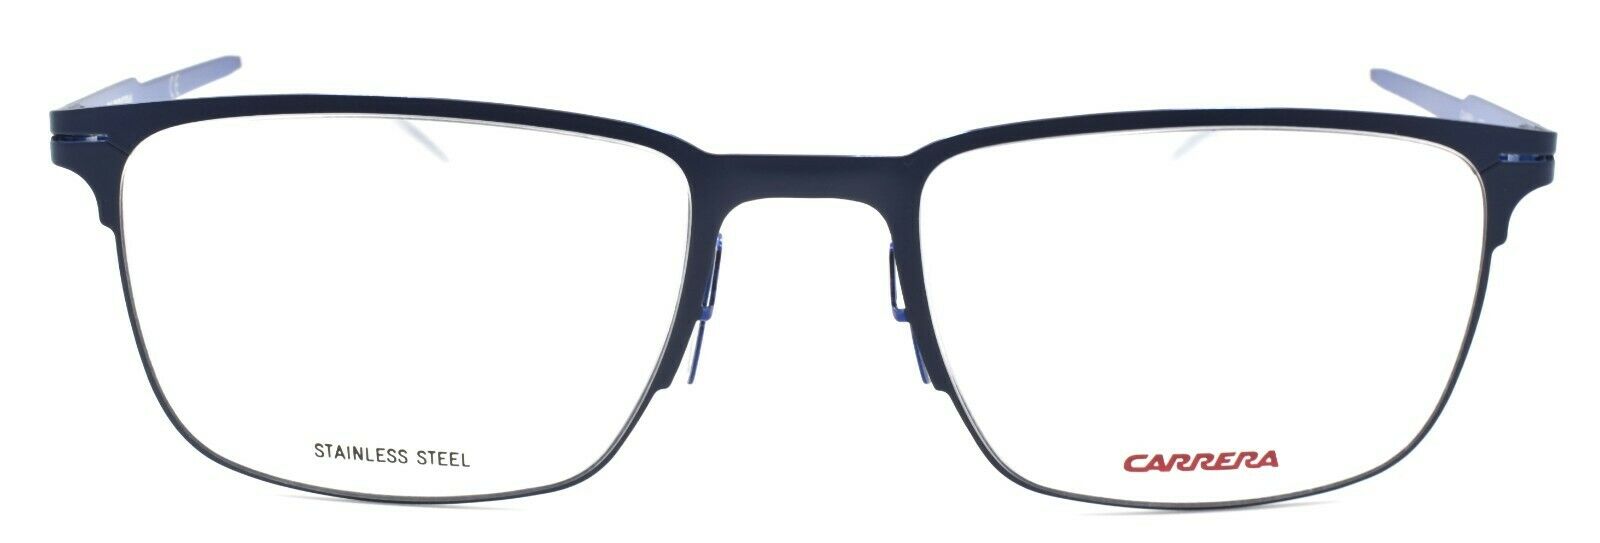 2-Carrera CA6661 VBM Men's Eyeglasses Frames 52-20-145 Matte Blue + CASE-762753964731-IKSpecs